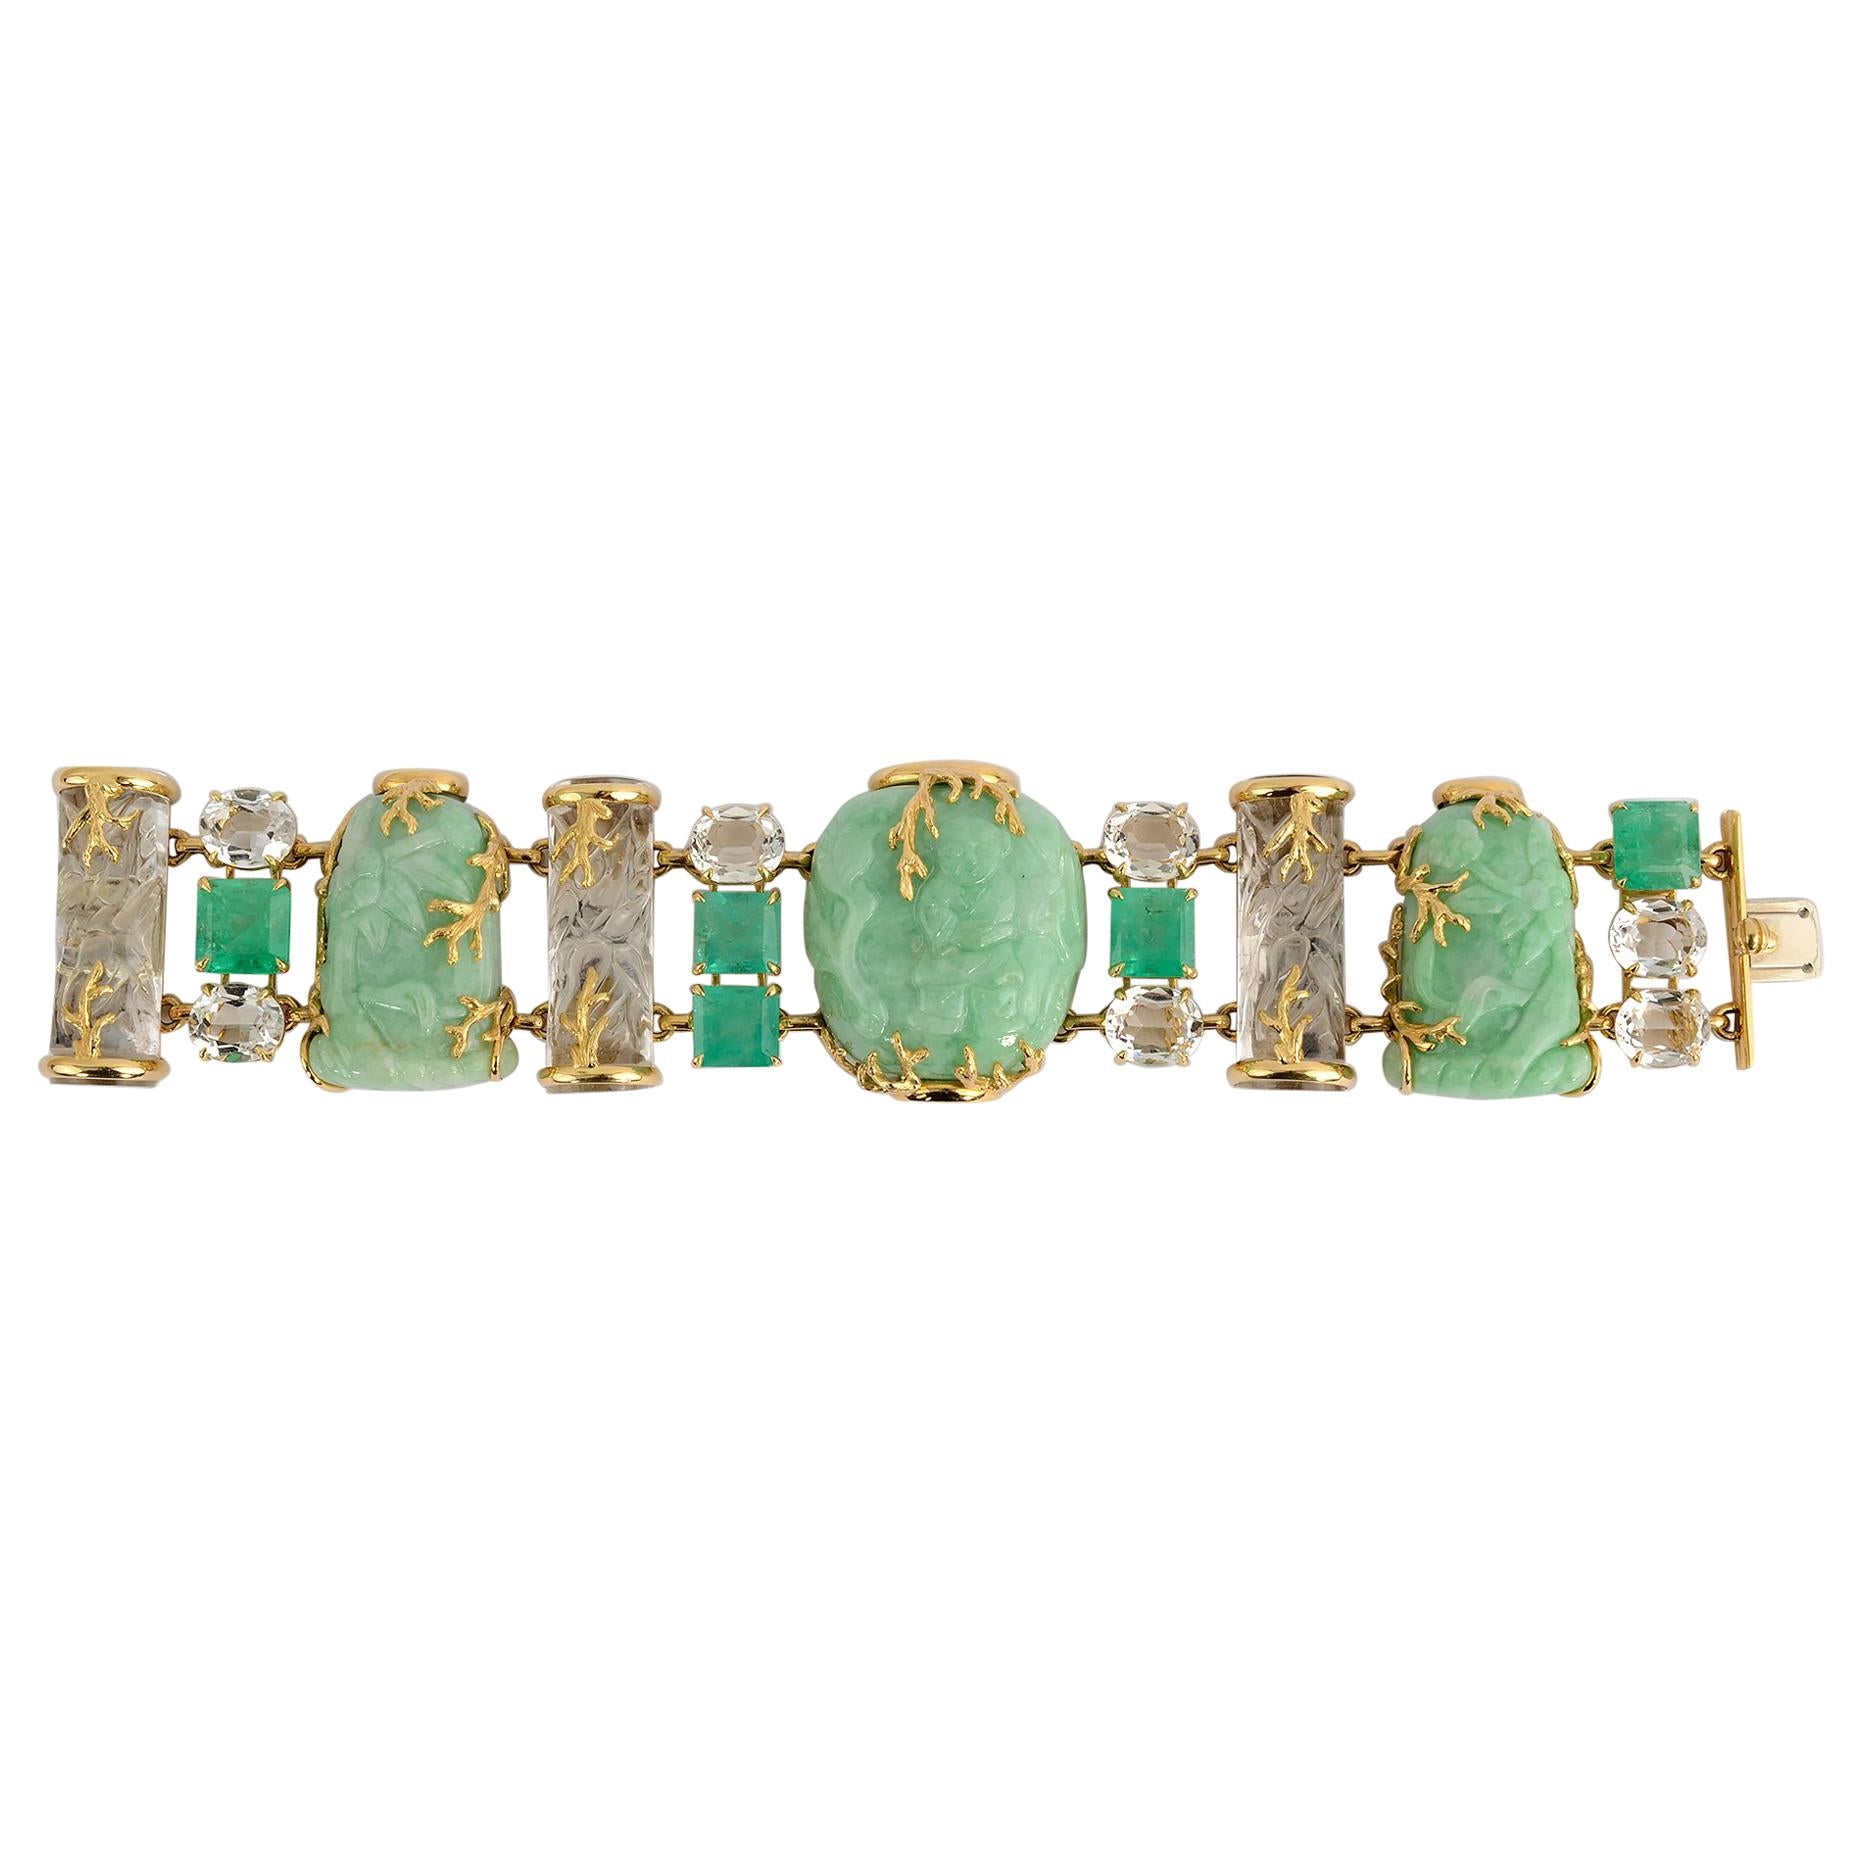 Seaman Schepps Jade, Rock Crystal and Emerald Gold Snuff Bottle Bracelet